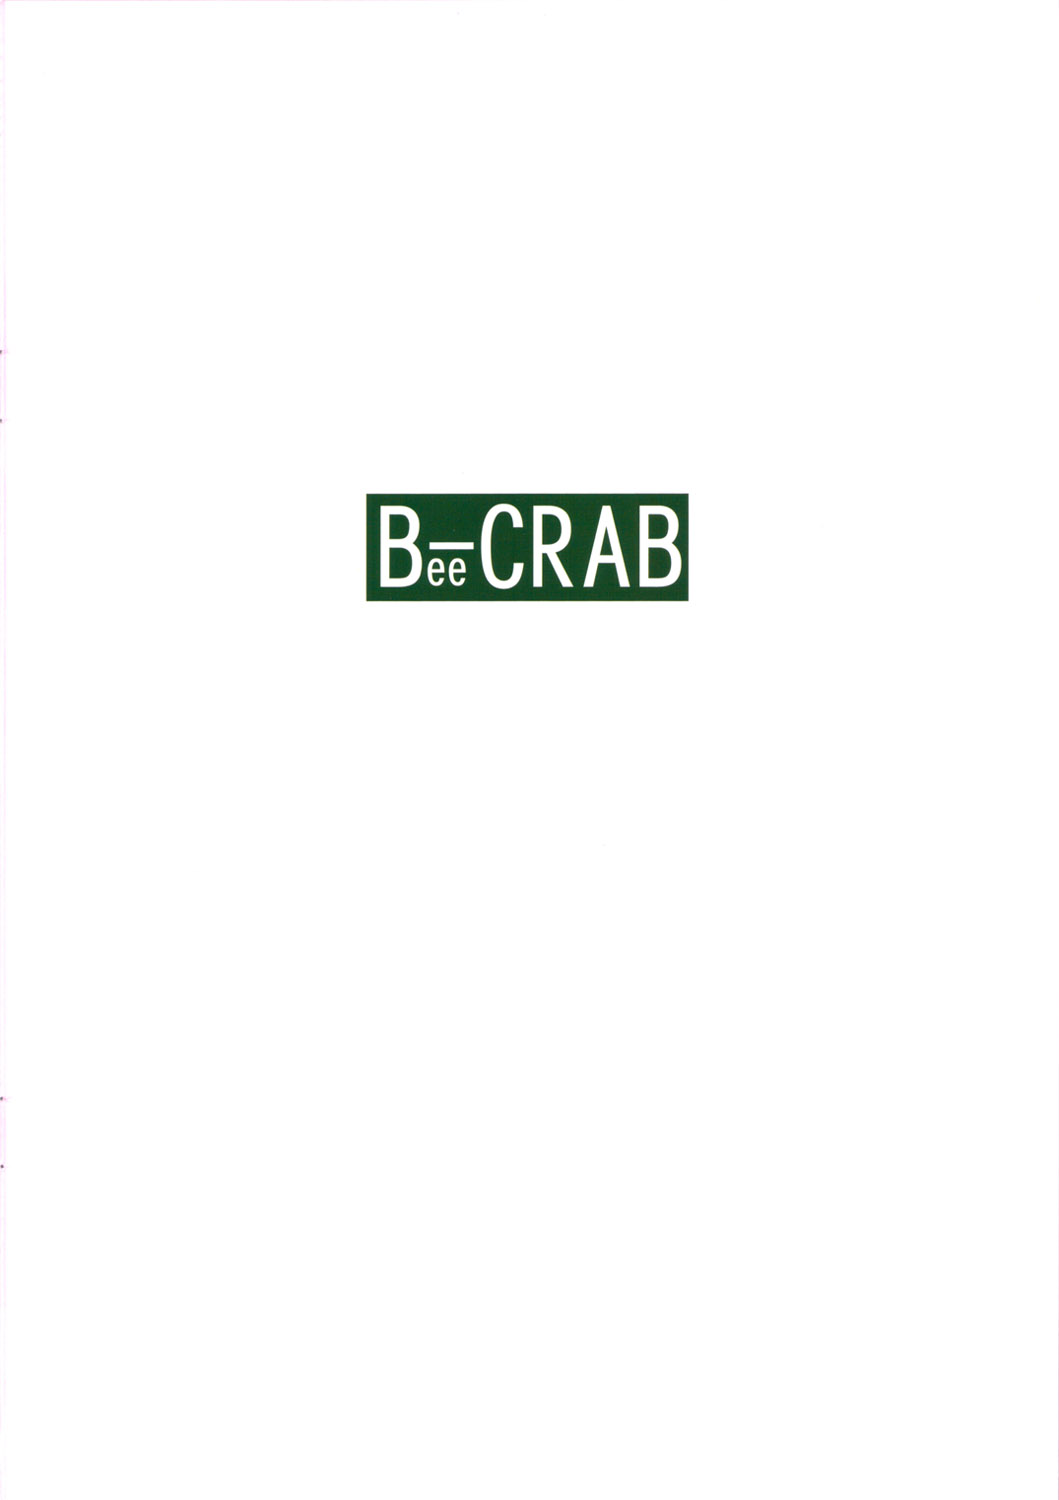 (COMIC1☆6) [GEGERA STANDARD (げげら俊和)] Bee-CRAB (偽物語)